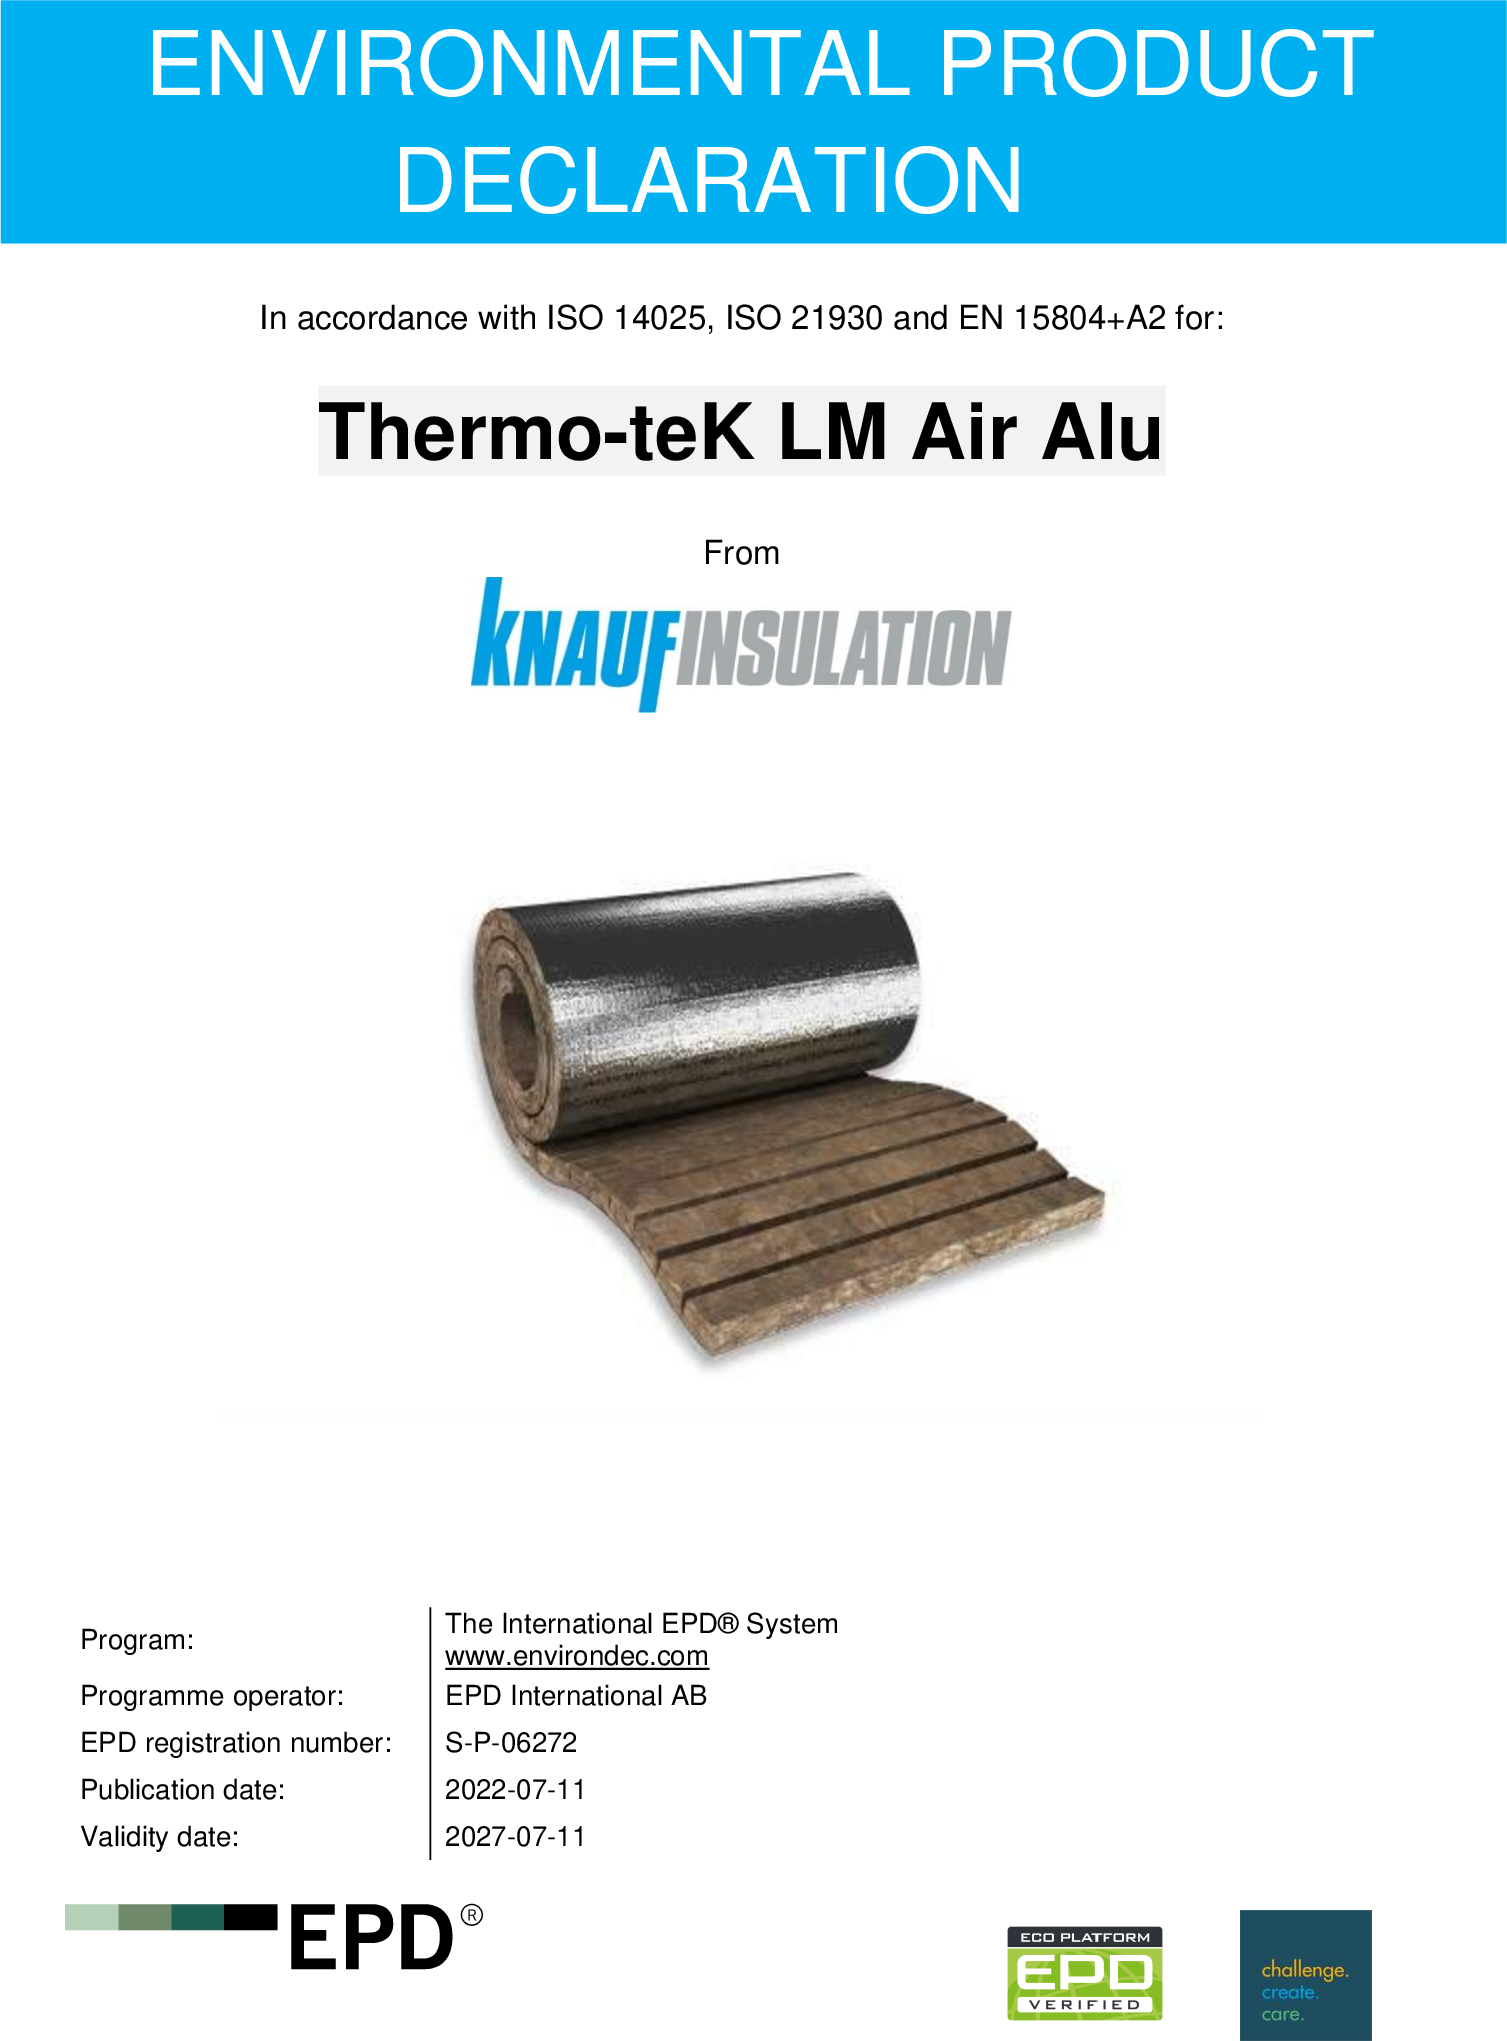 Thermo-teK LM Air Alu